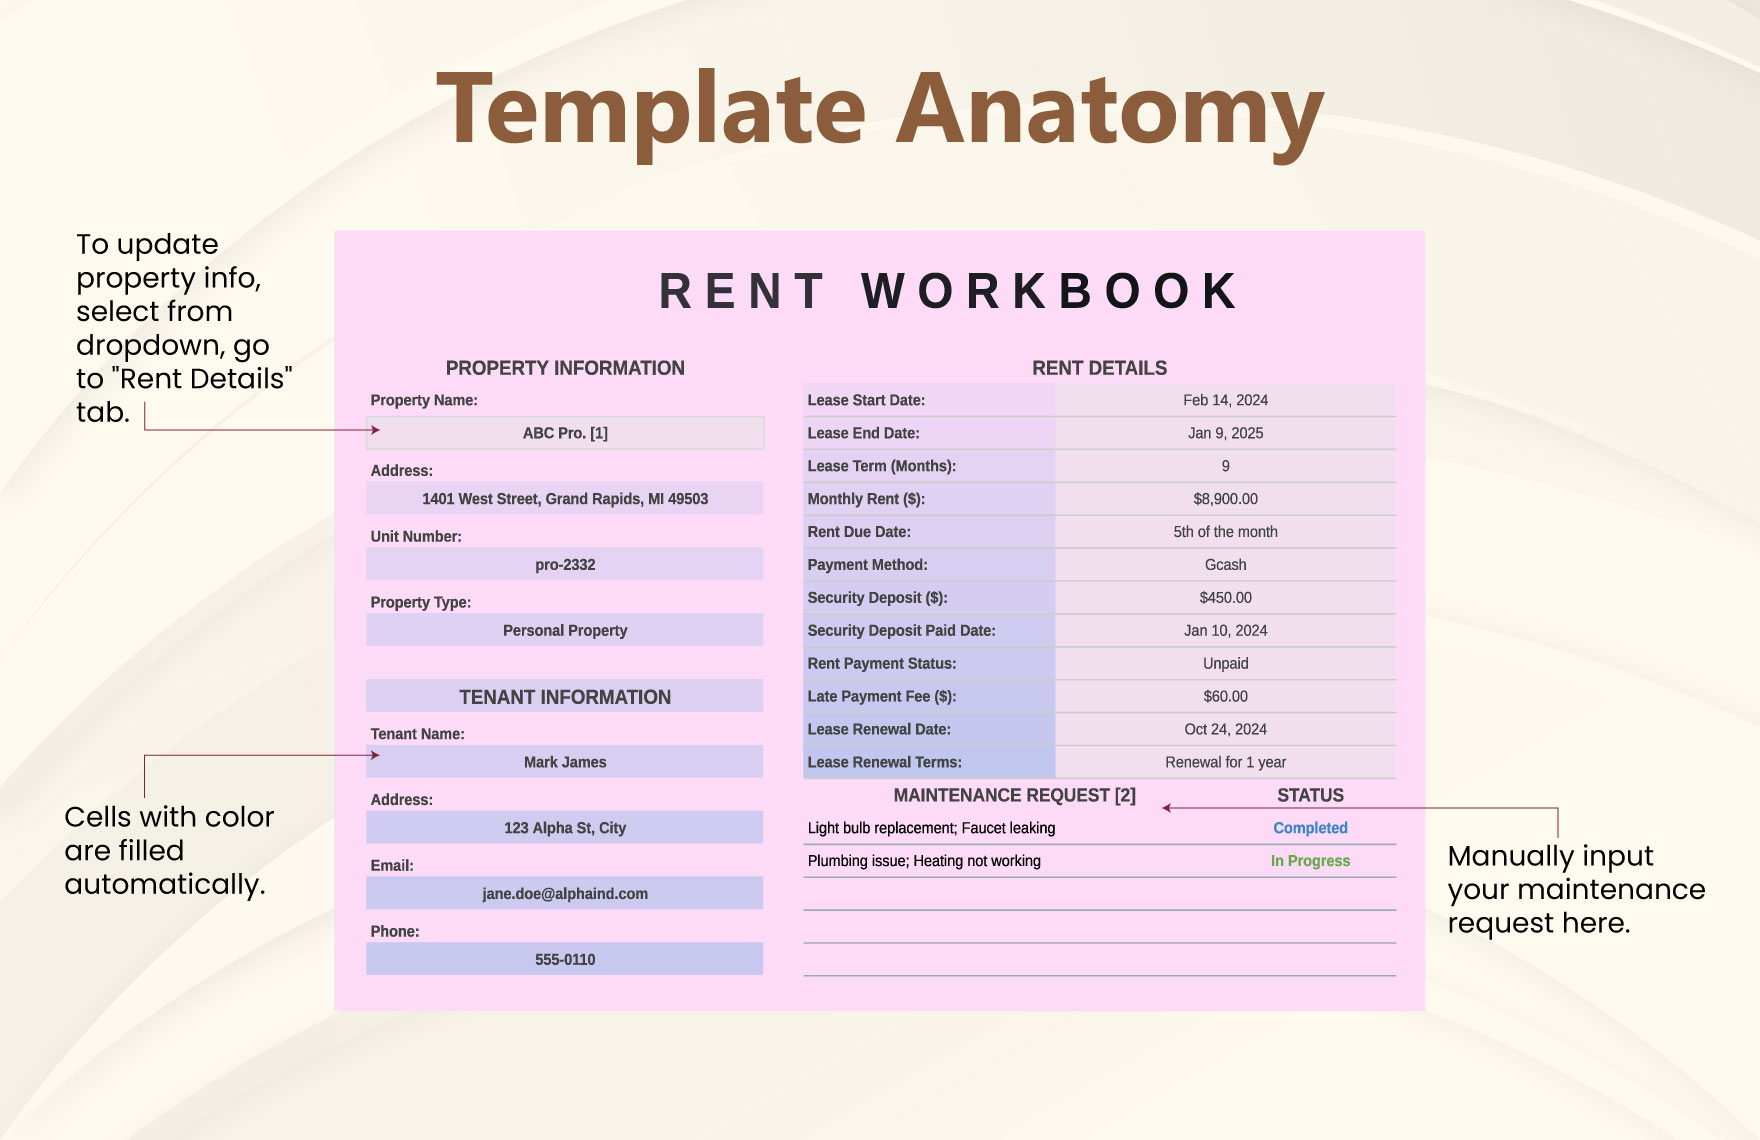 Rent Workbook Template